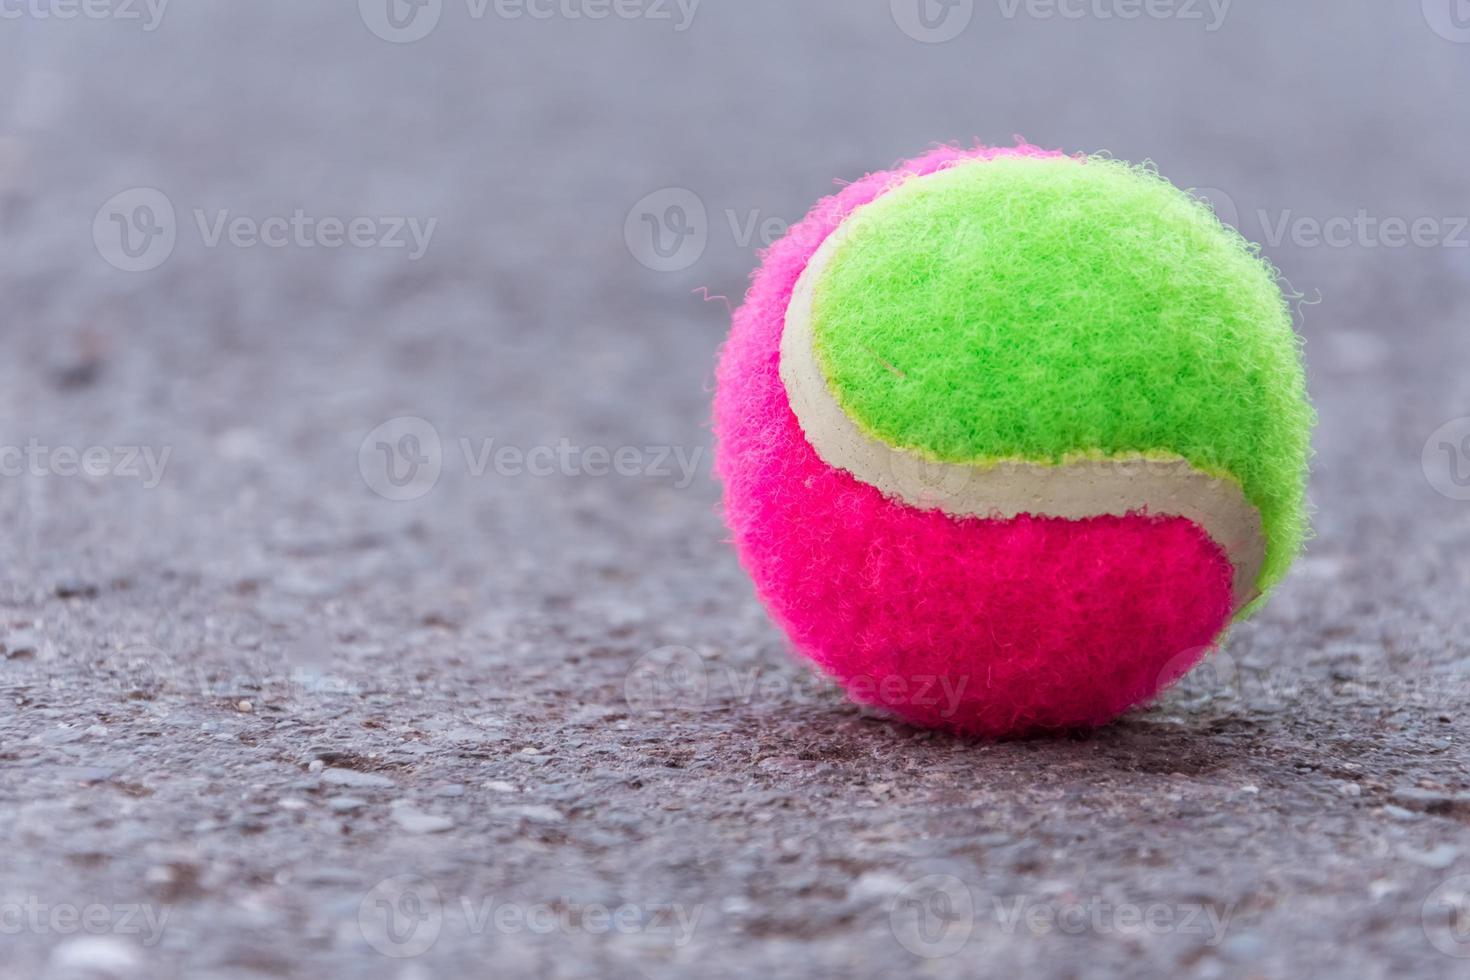 A toy tennis ball photo